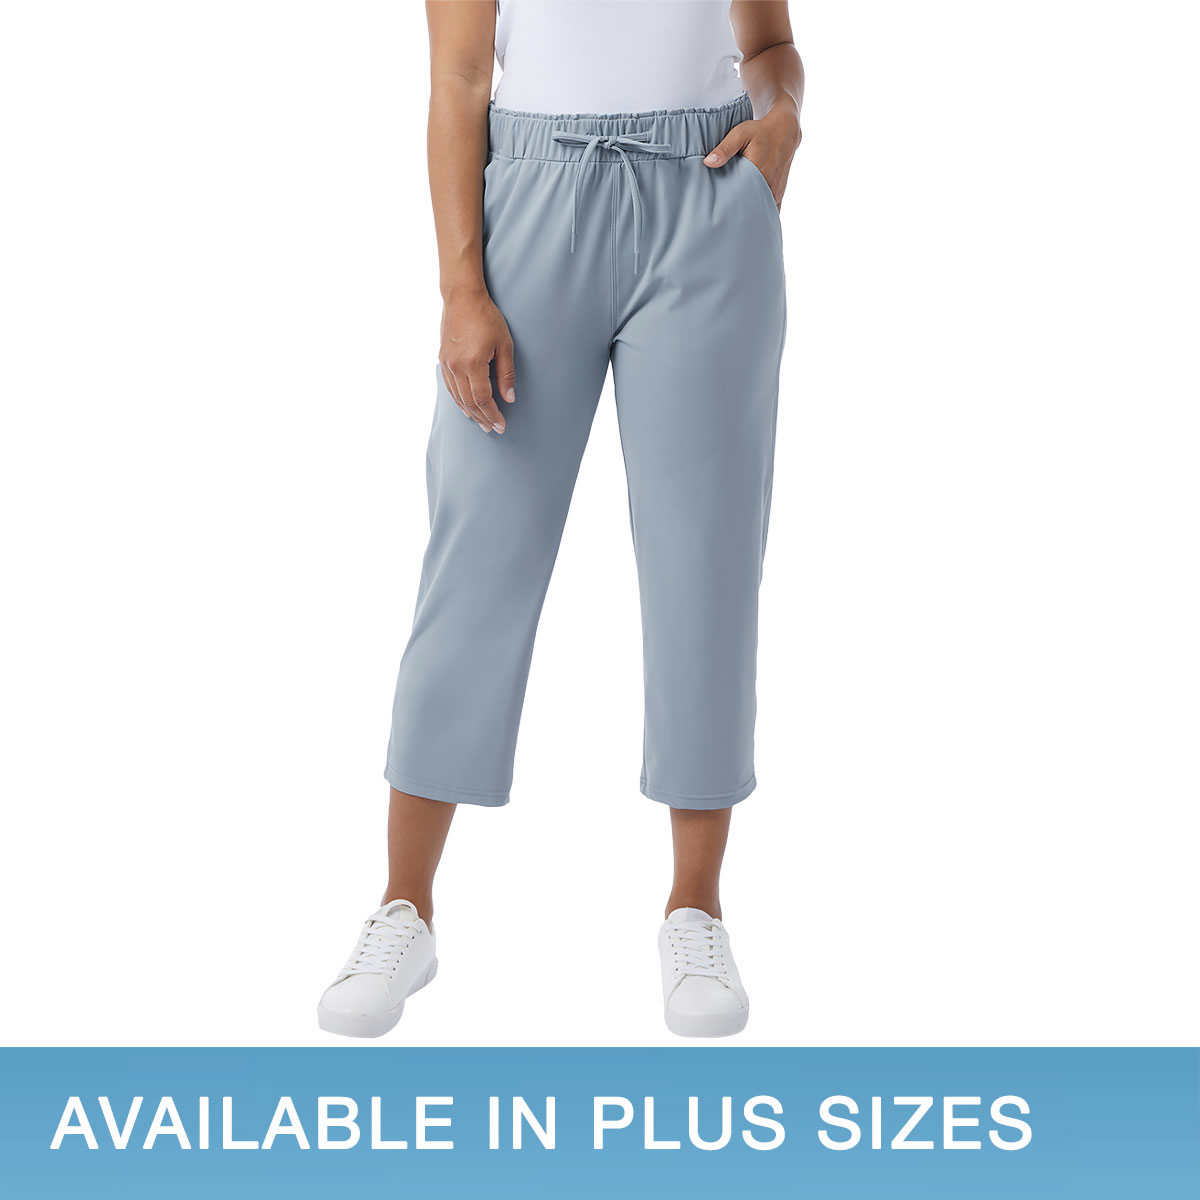 32 Degrees Cool Size XS Ladies' Soft Pull on Capri Lounge Pants